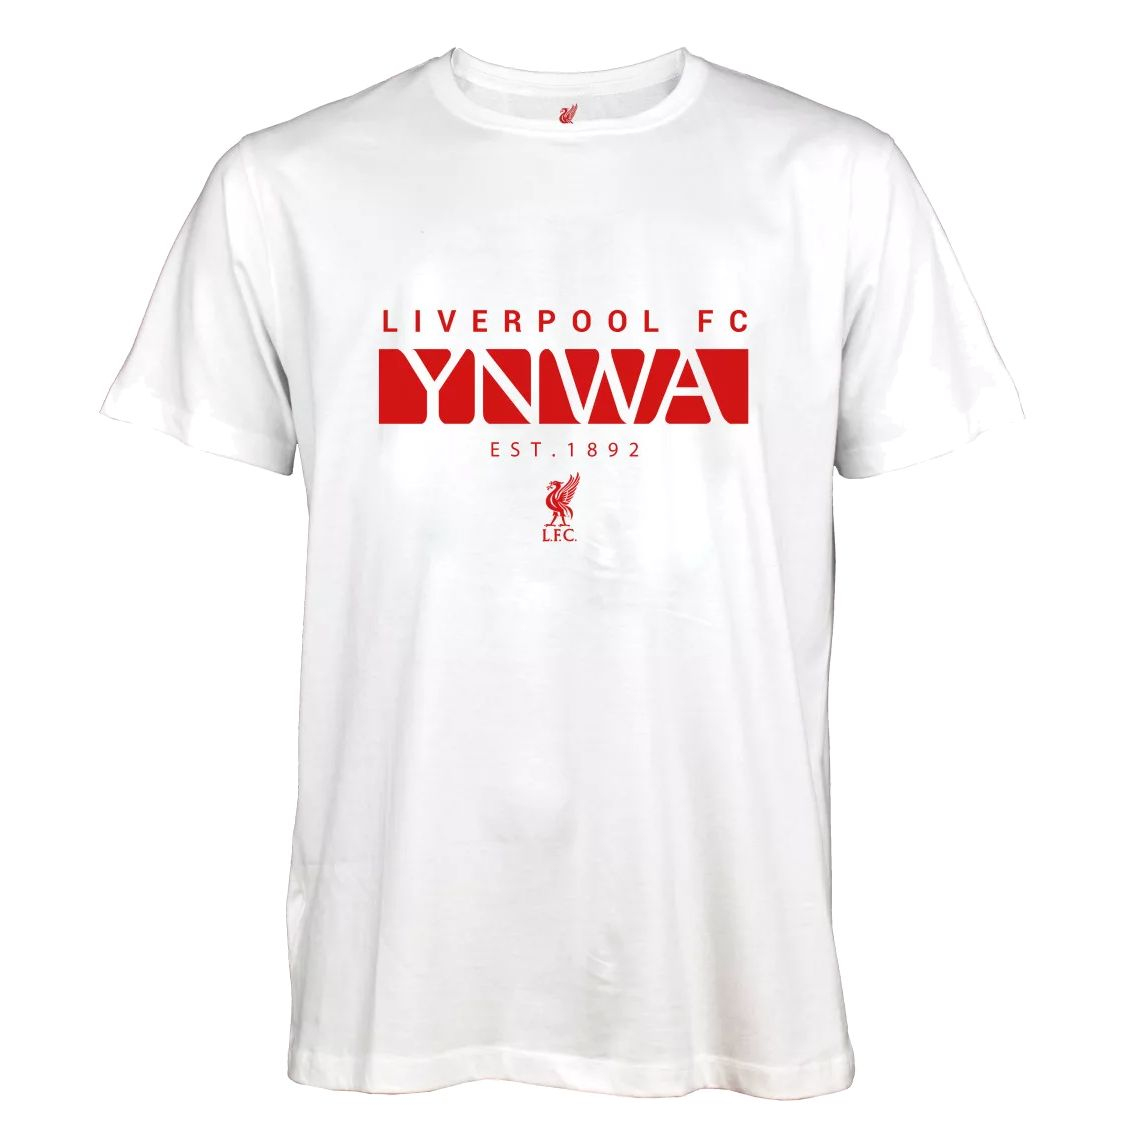 Liverpool koszulka dziecięca No49 white